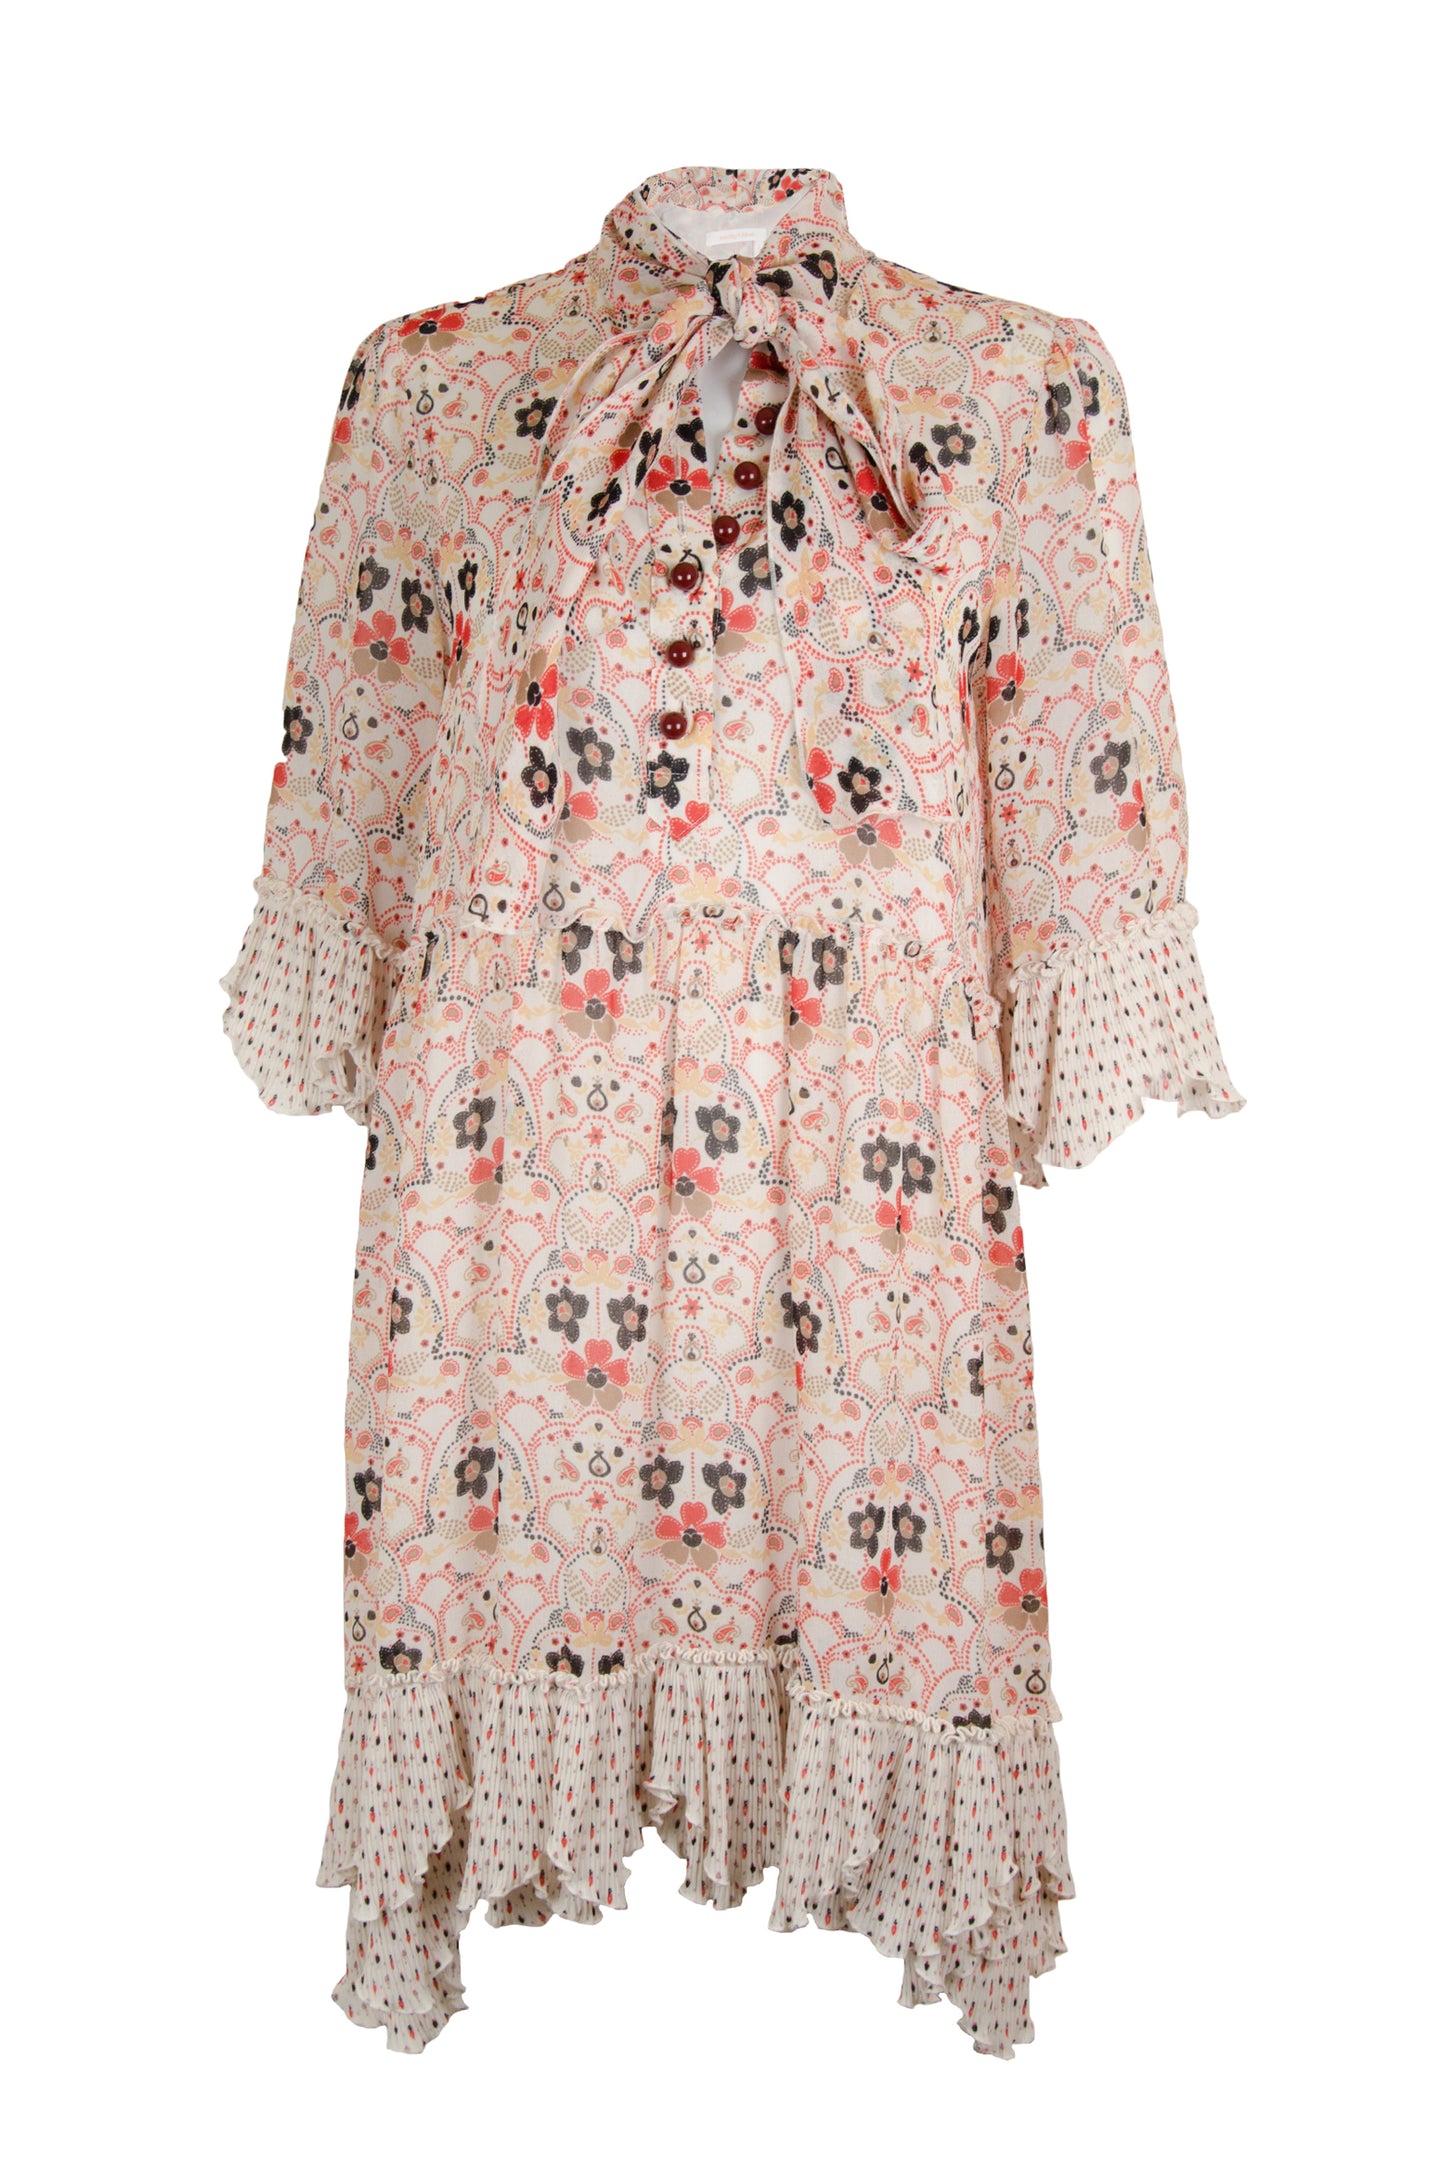 Vintage Floral Ruffle Dress